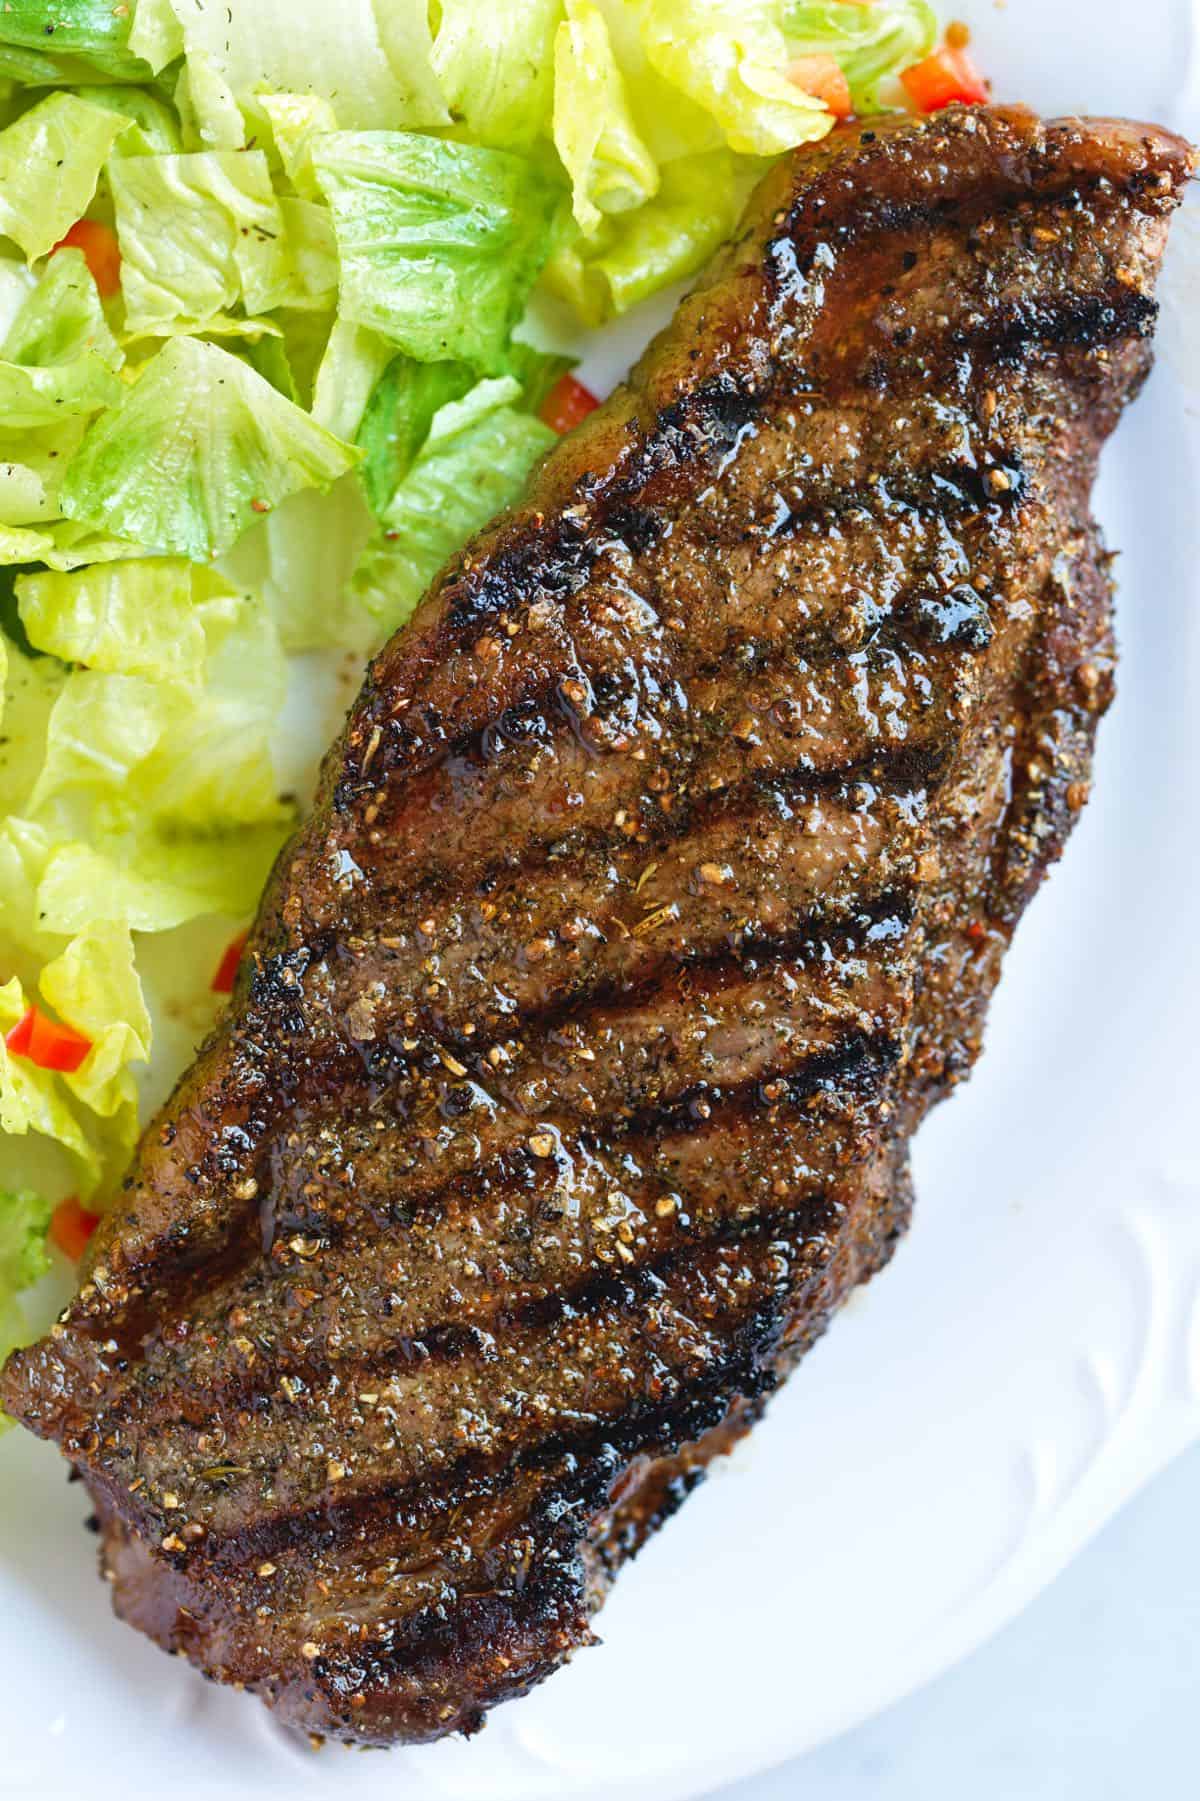 Grilled Steak next to a salad